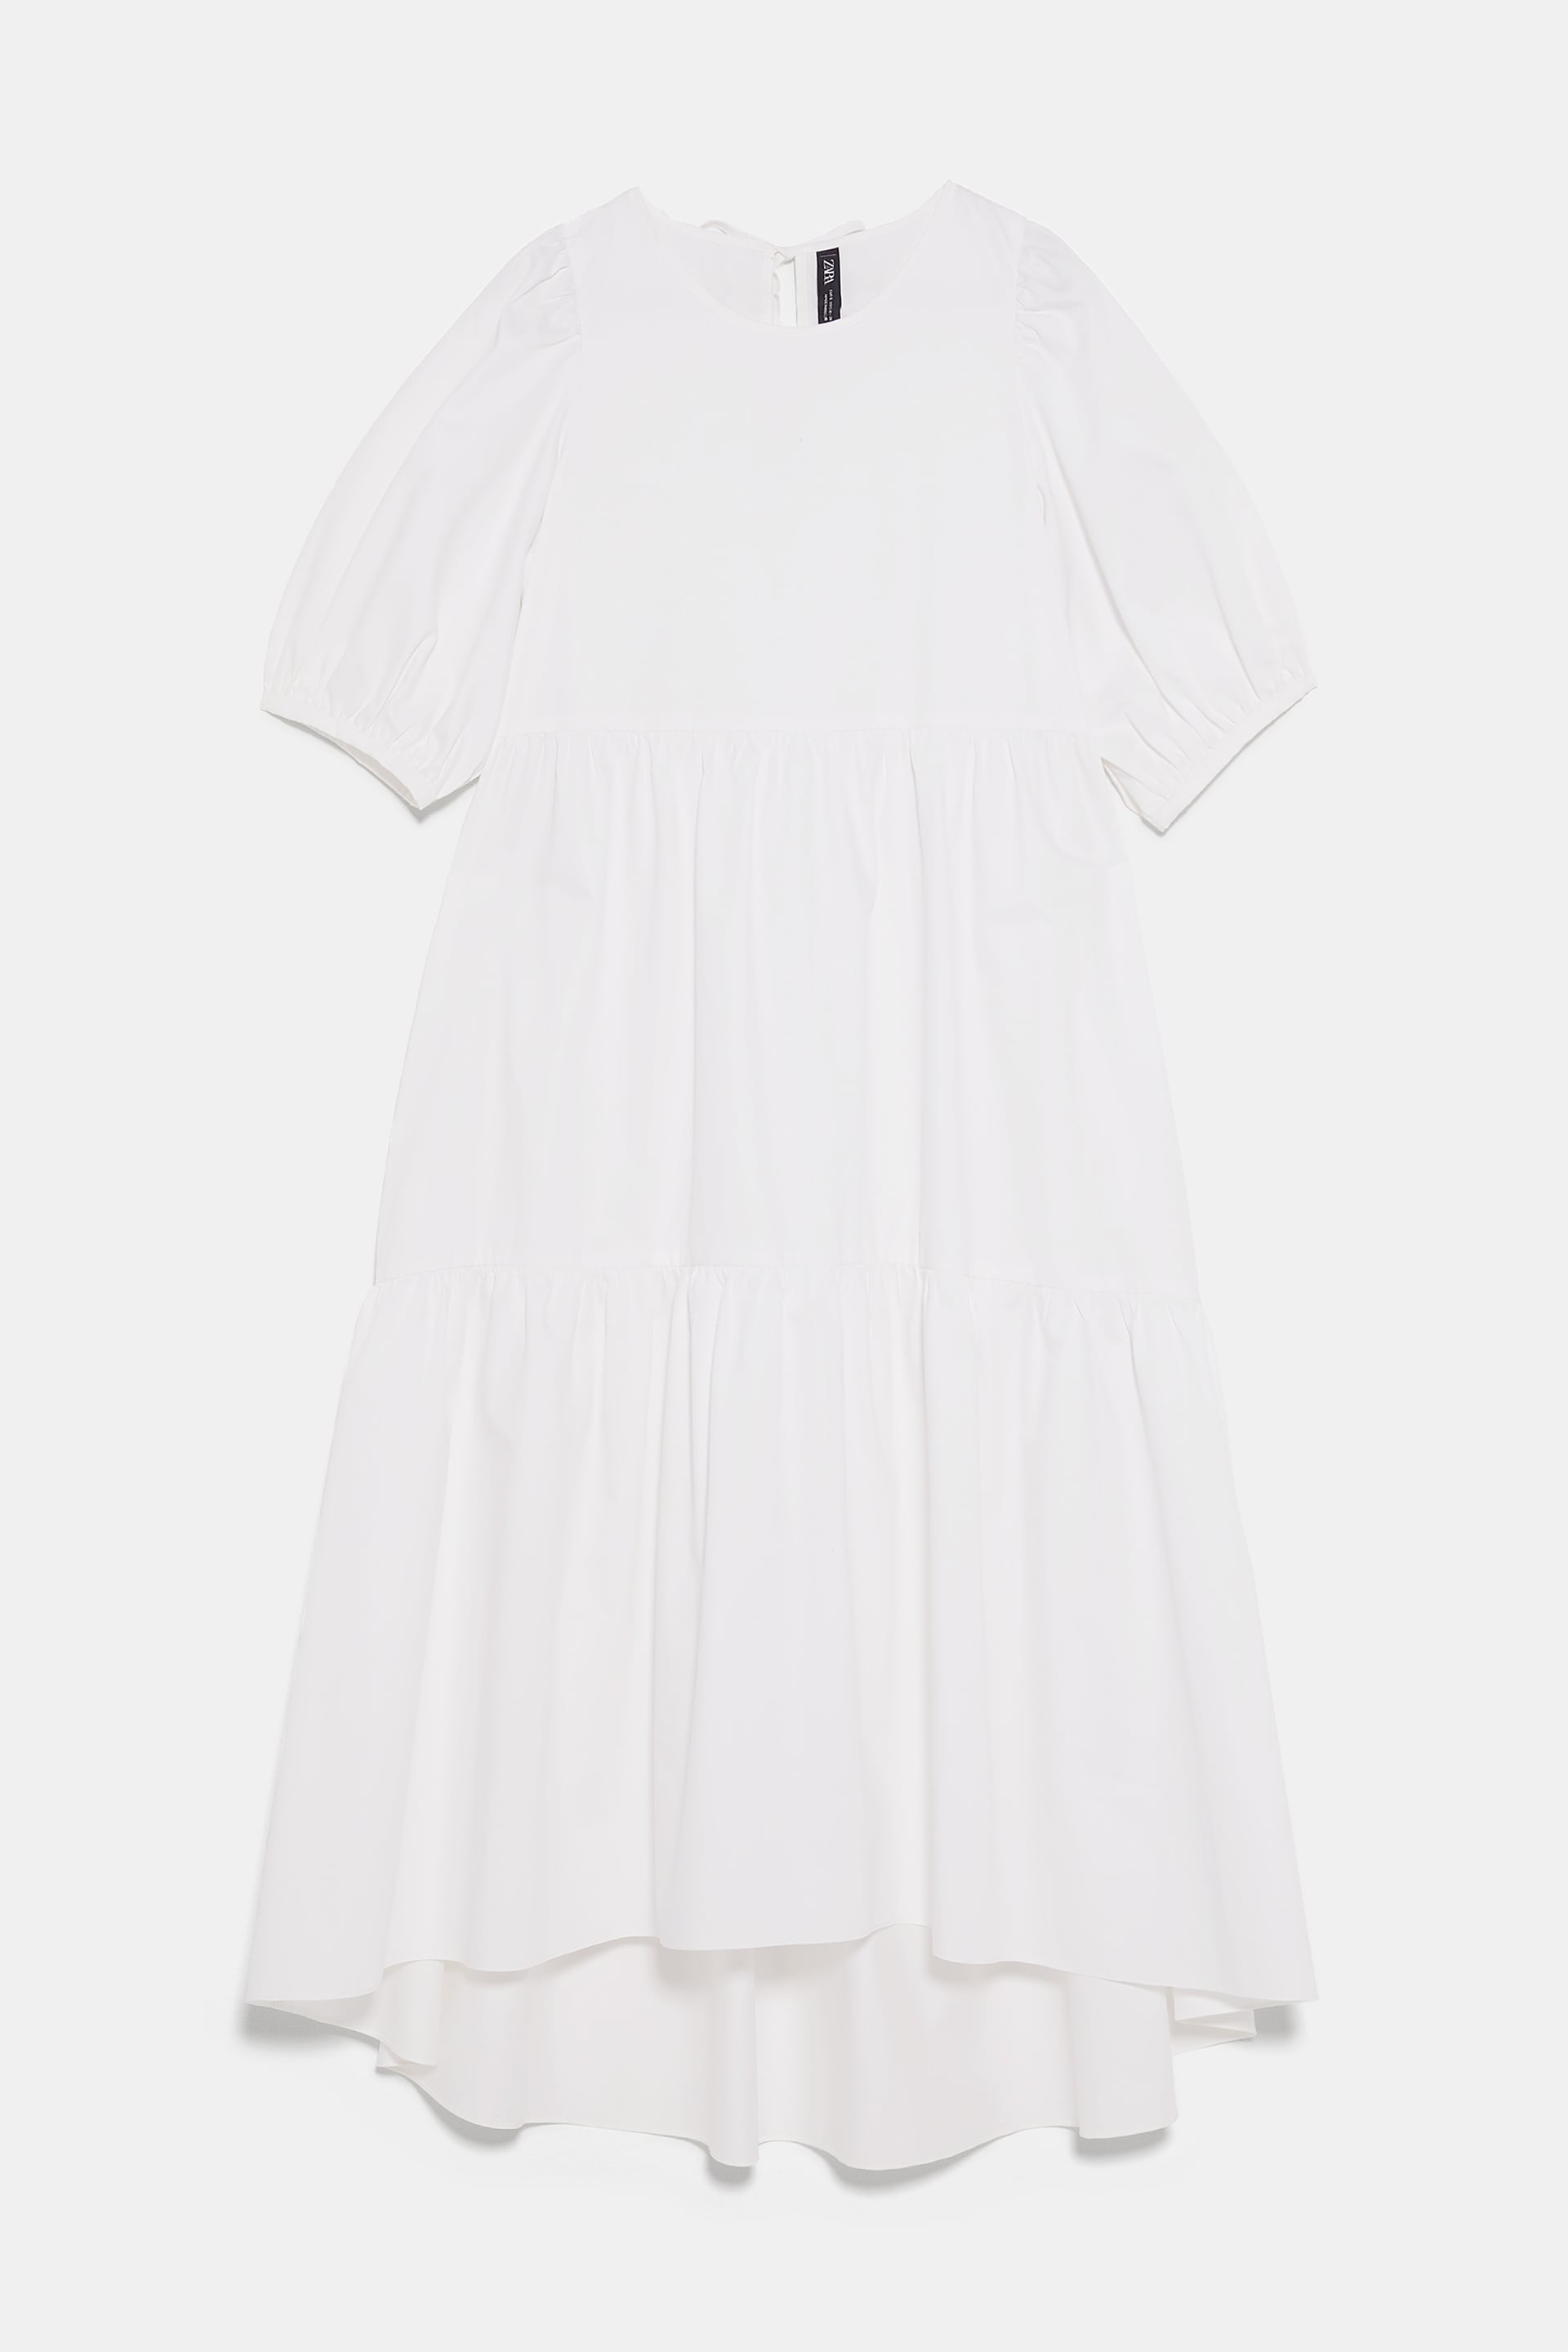 zara white dress 2019